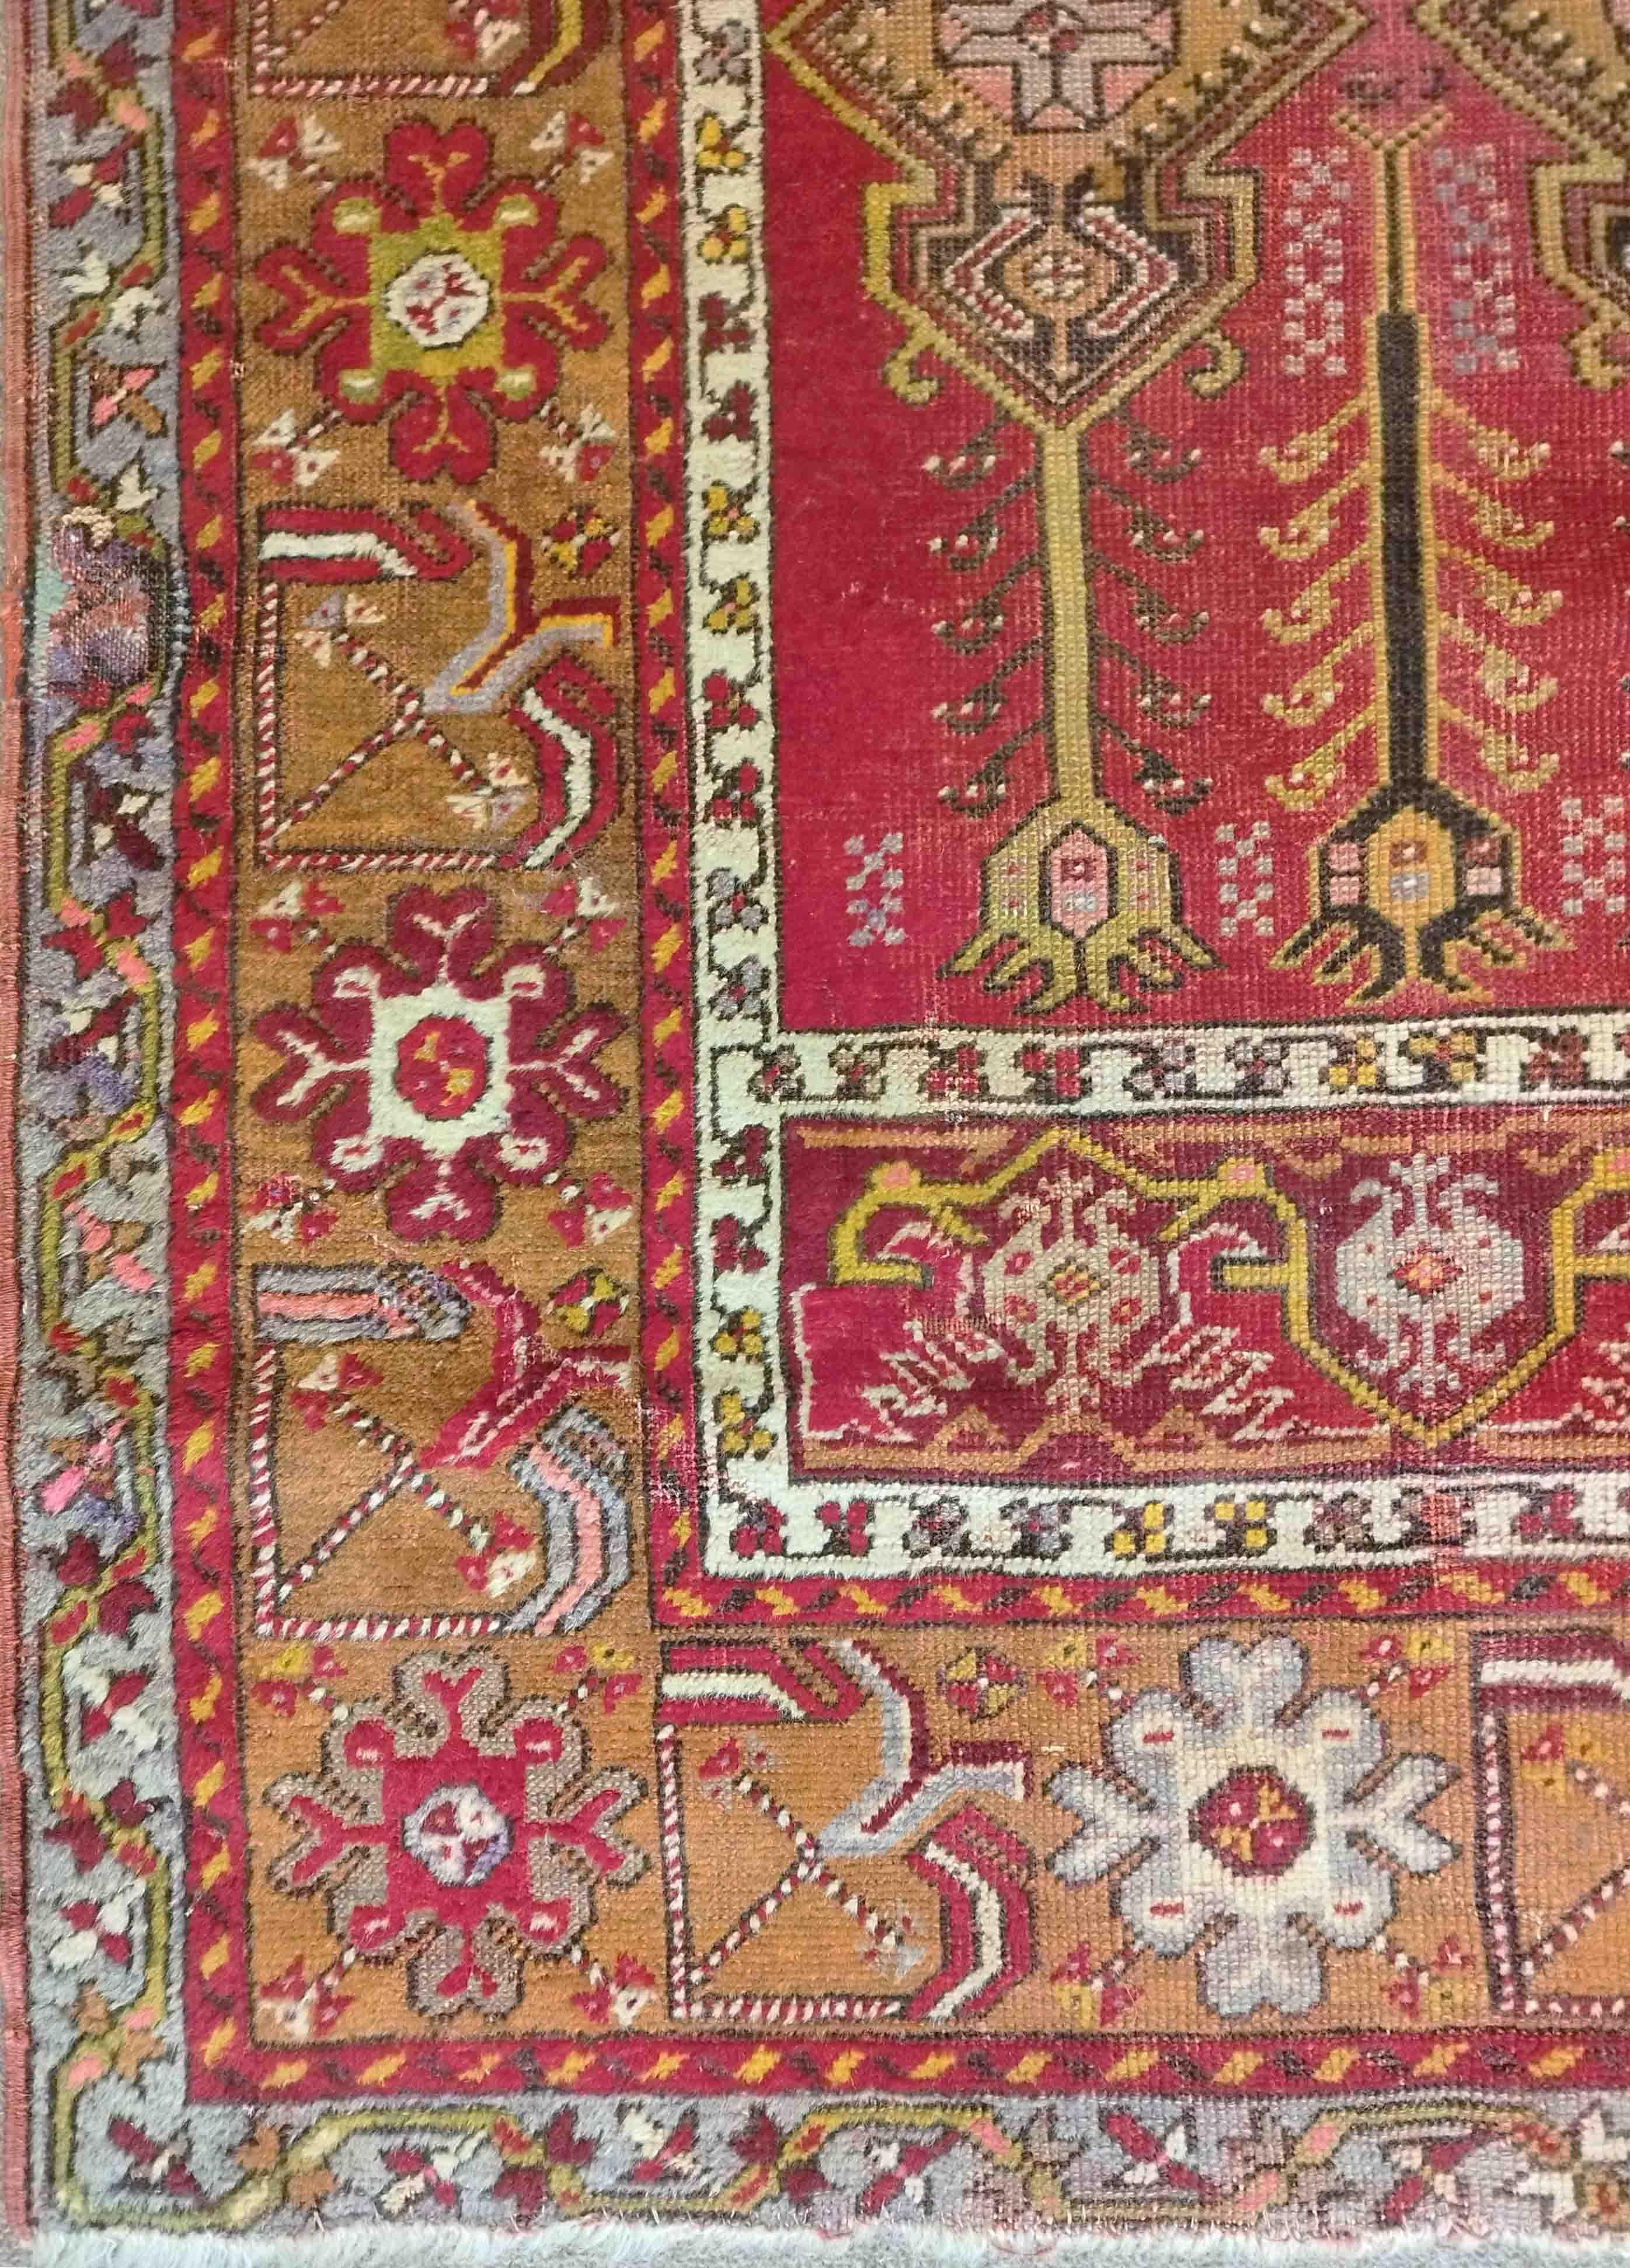  Kirchir Turkish Carpet, 19th Century - N° 728 For Sale 2